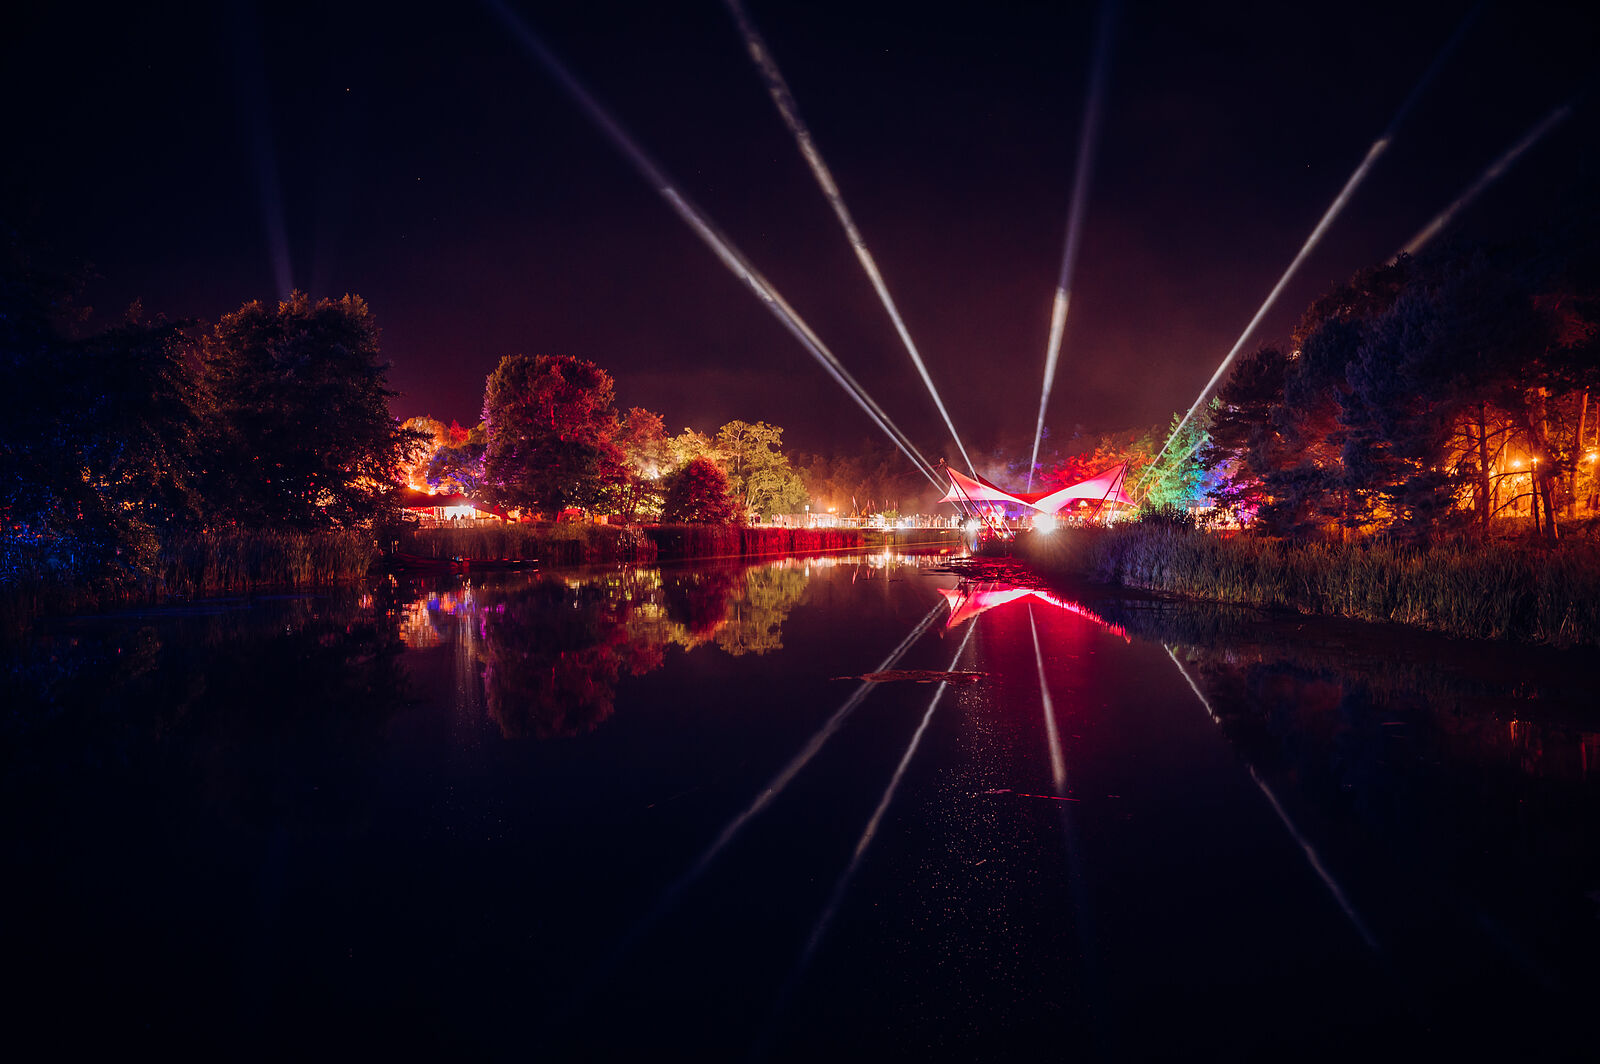 Latitude Festival 2022